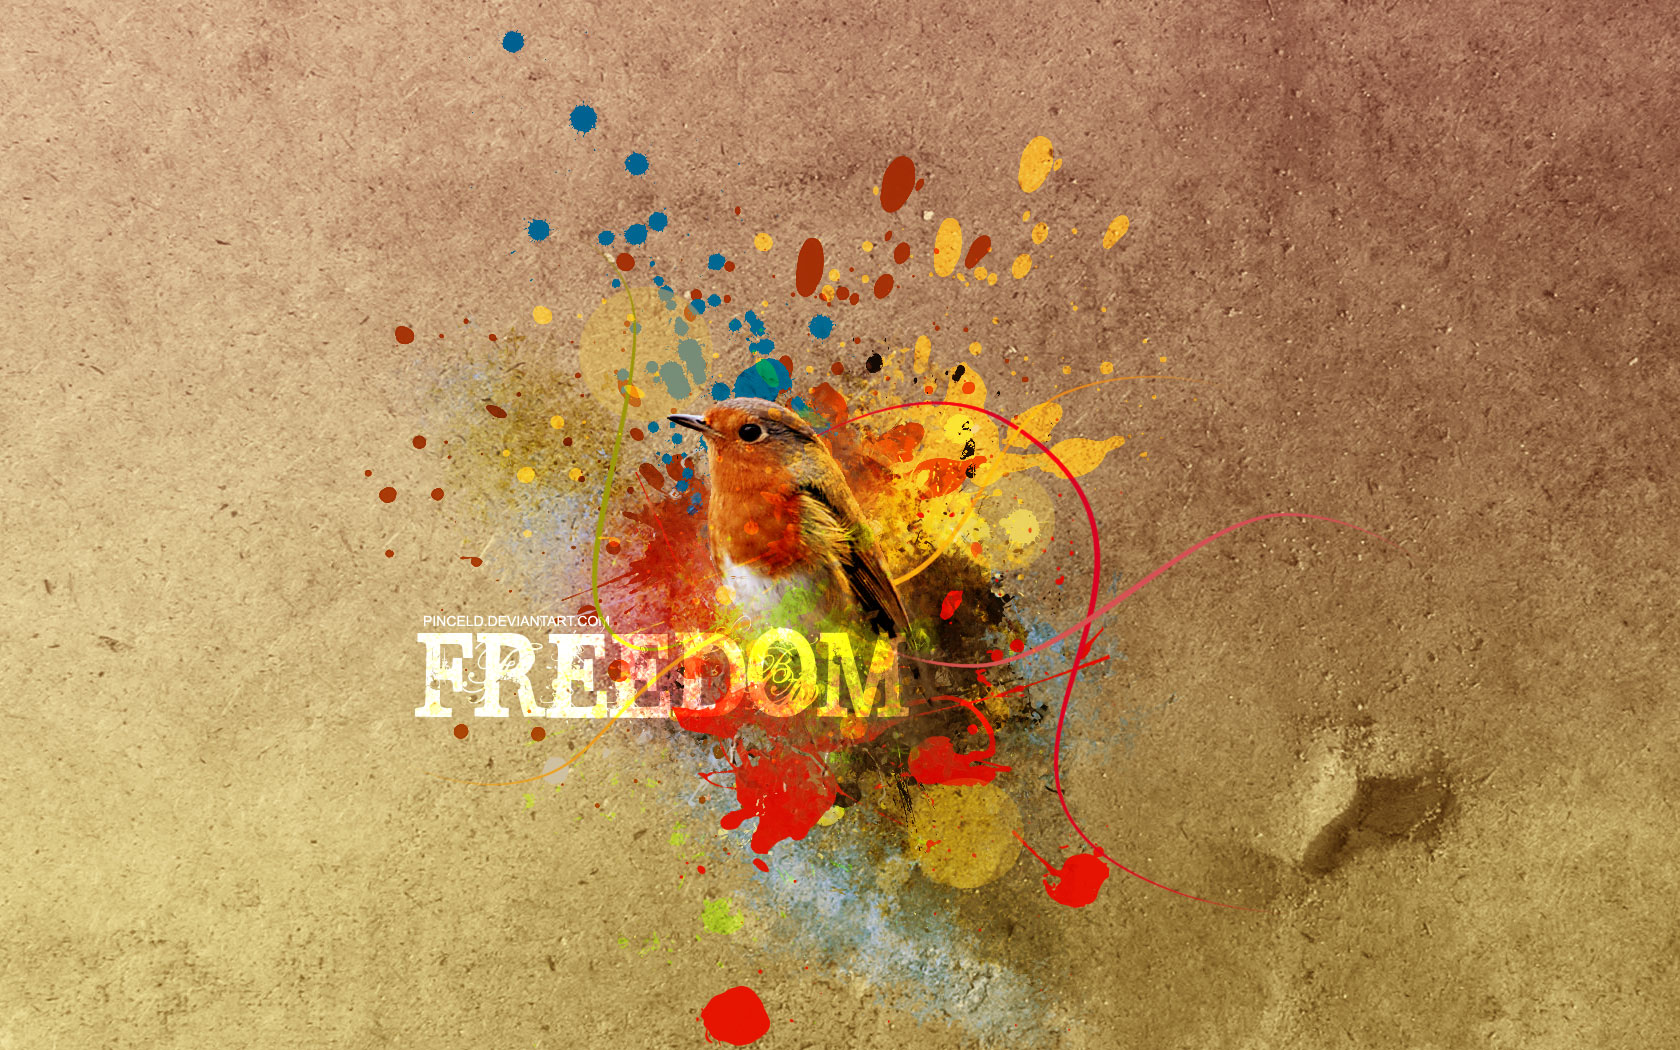 Freedom Wallpaper By Pinceld 1680x1050 pixel Popular HD Wallpaper 1680x1050